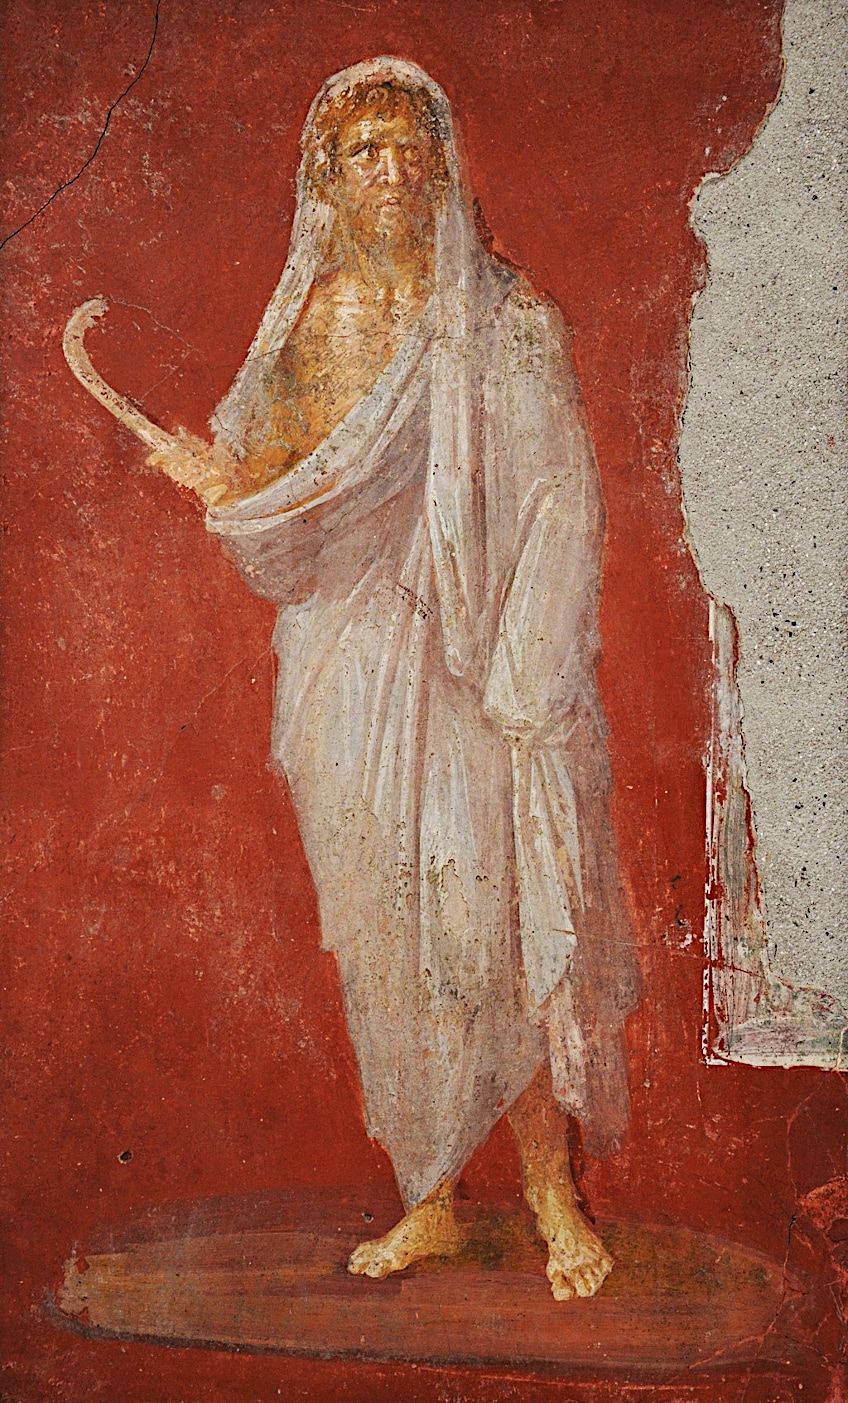 Greek God Cronus and Roman God Saturn